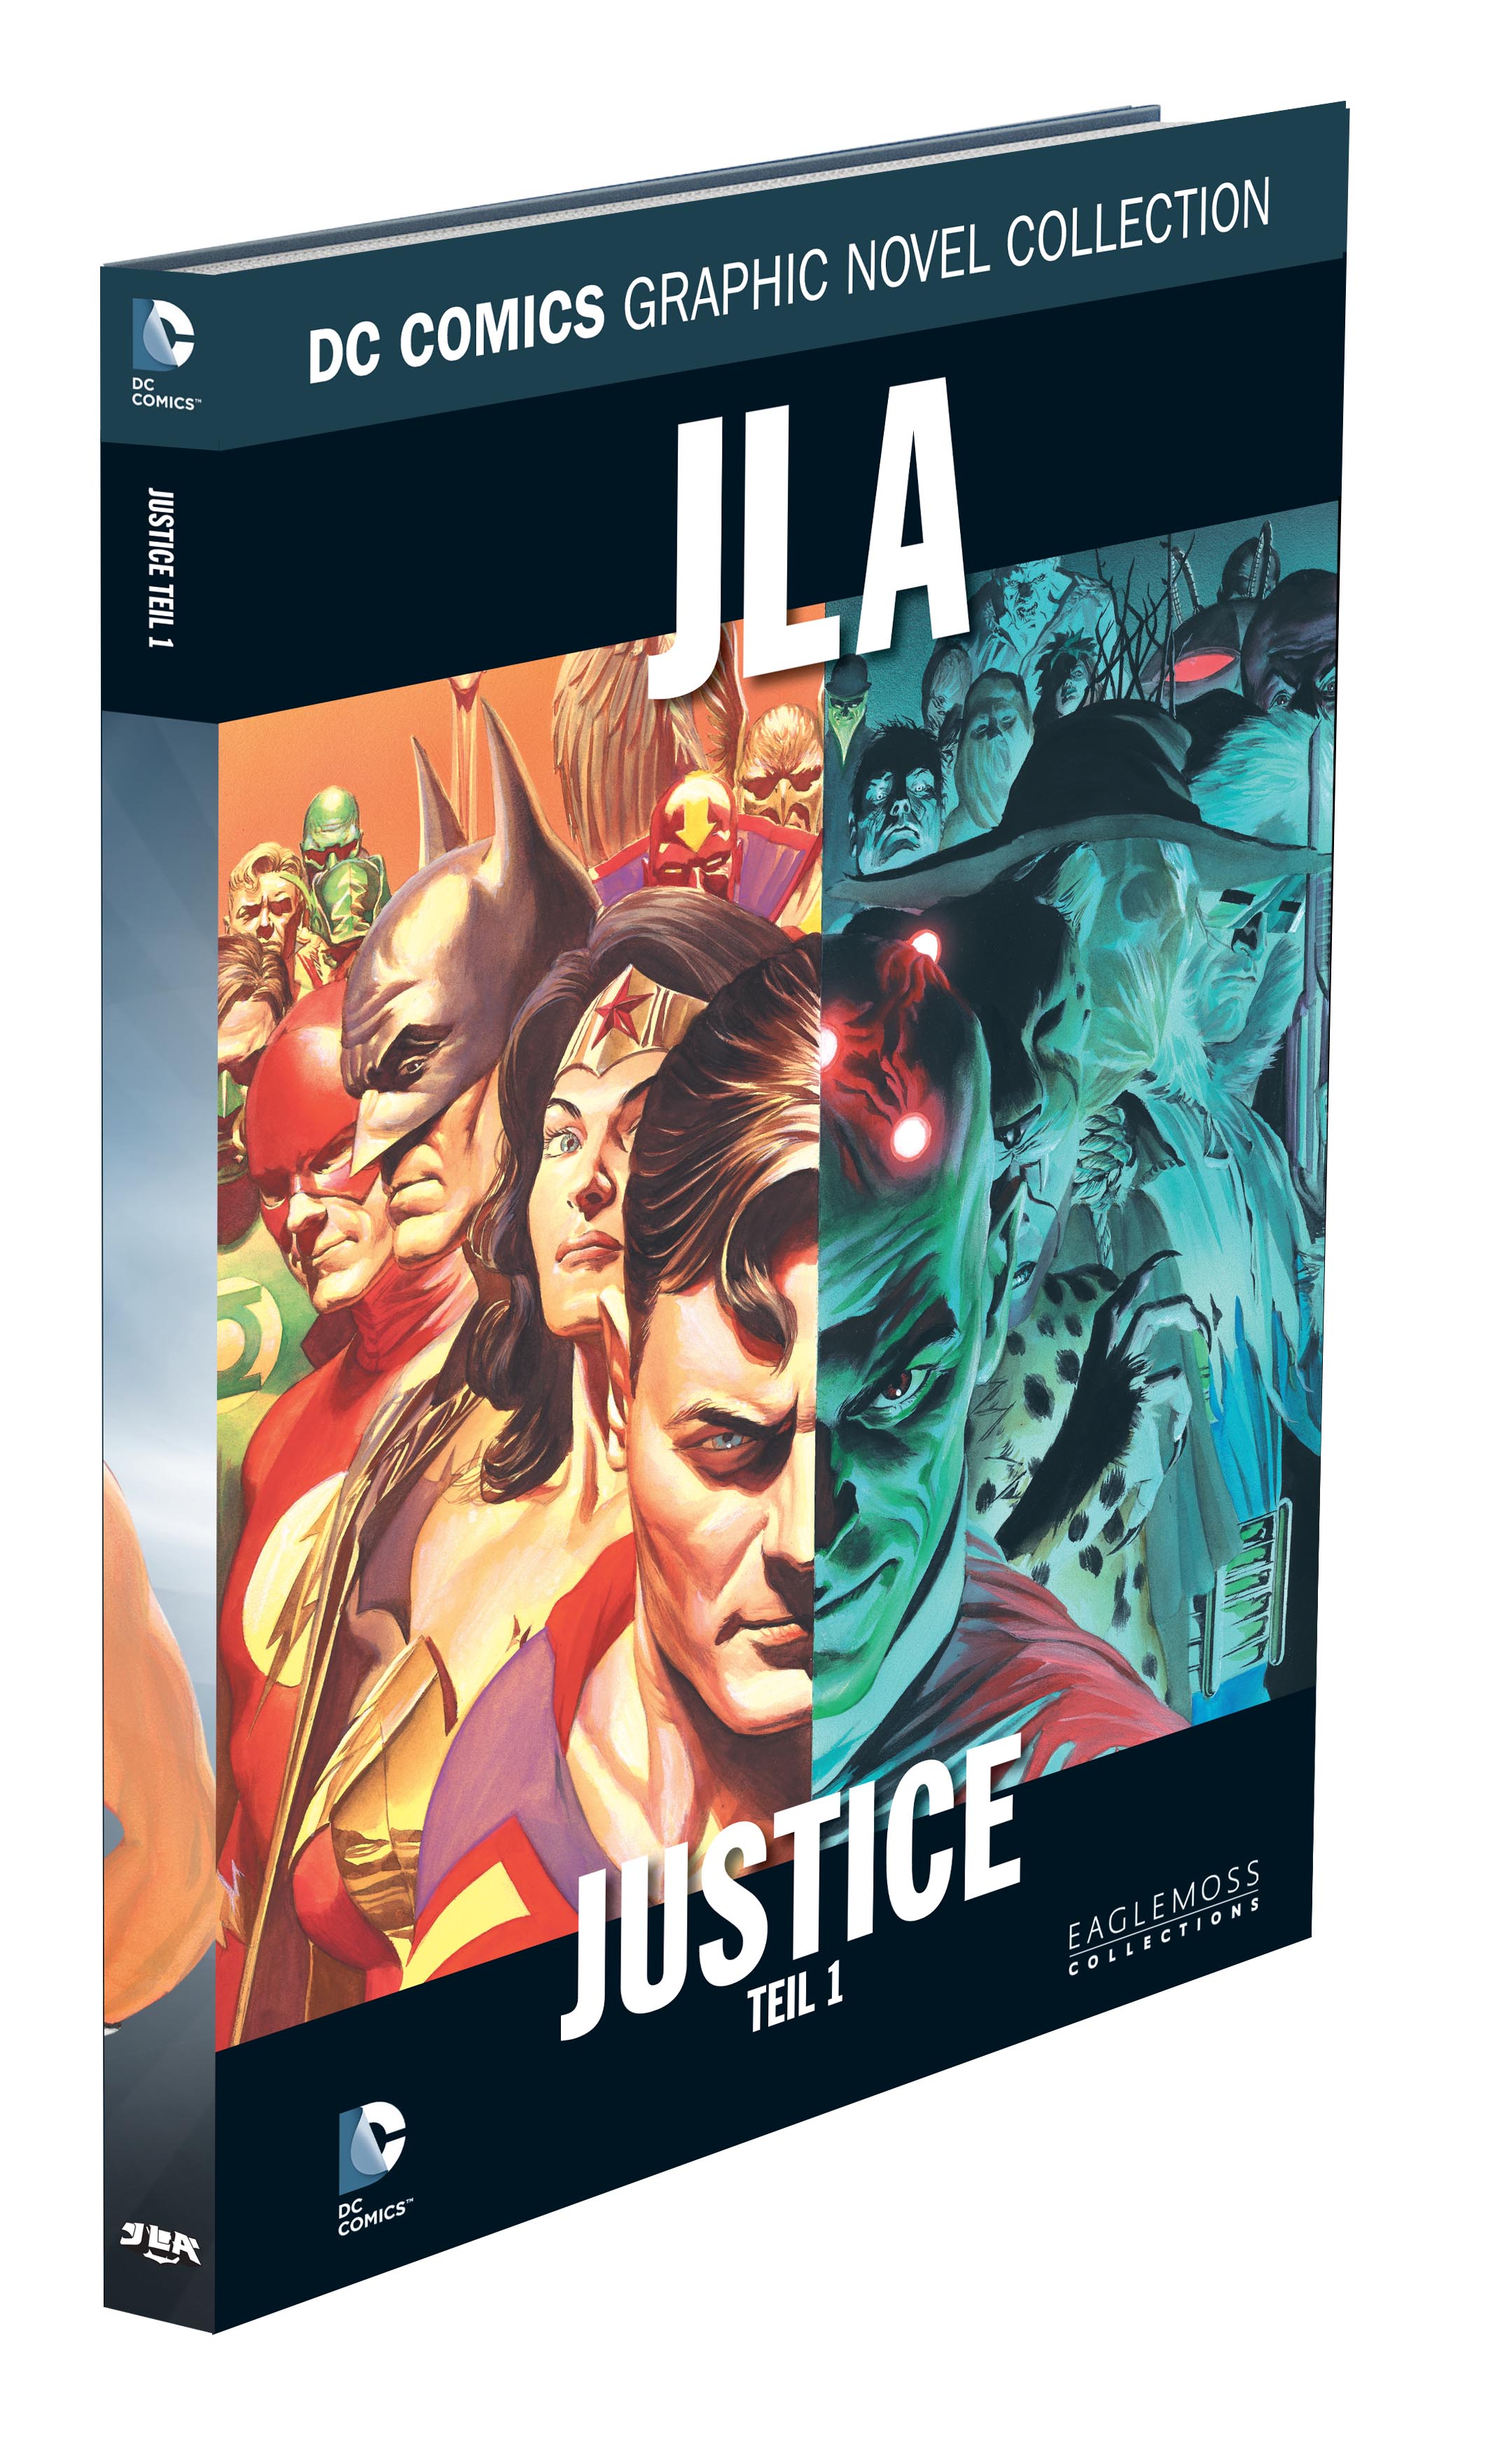 DC Comics Graphic Novel Collection JLA - Justice Teil 1